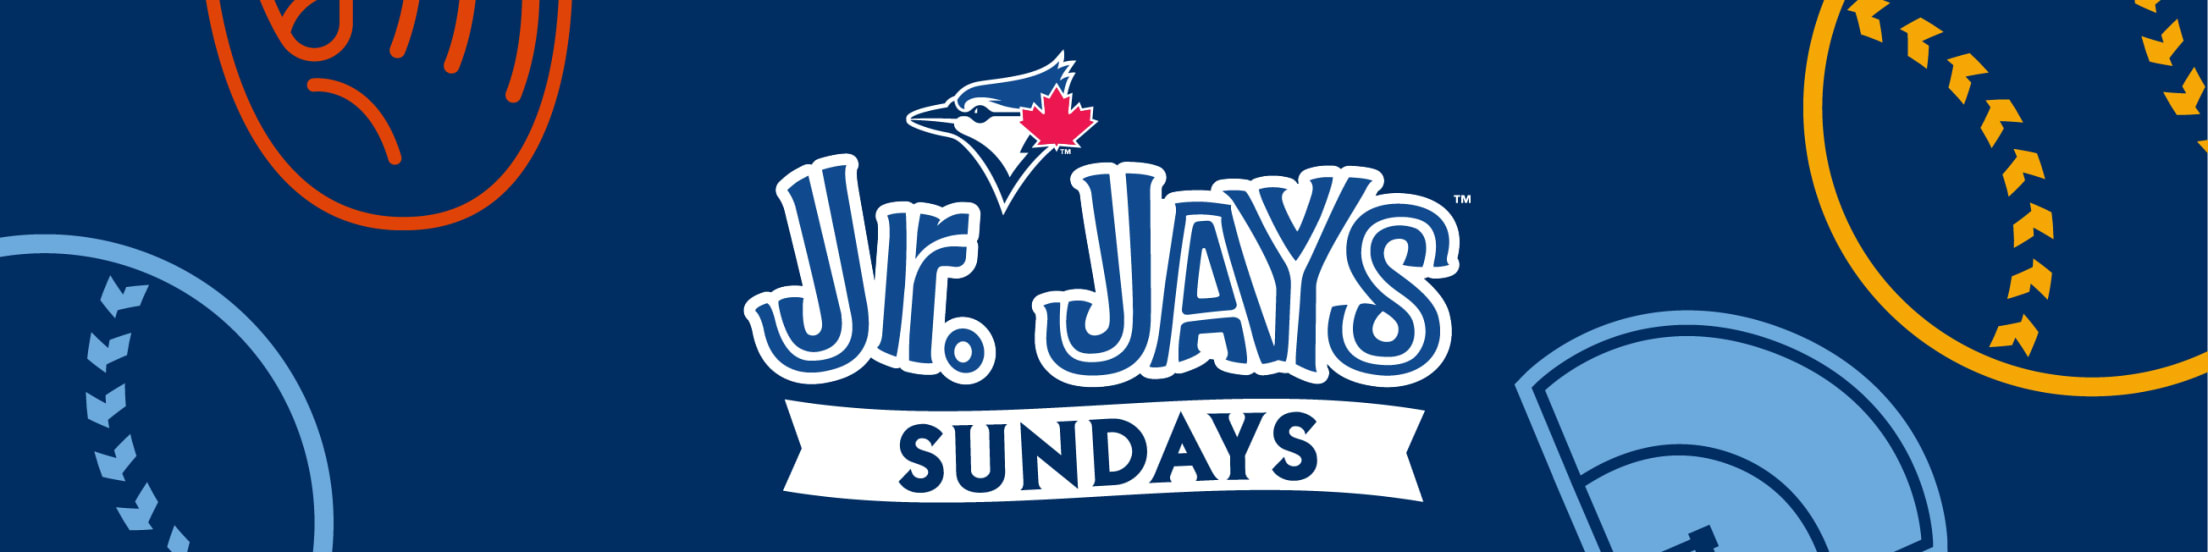 Jr. Jays Sunday- Toronto Blue Jays 